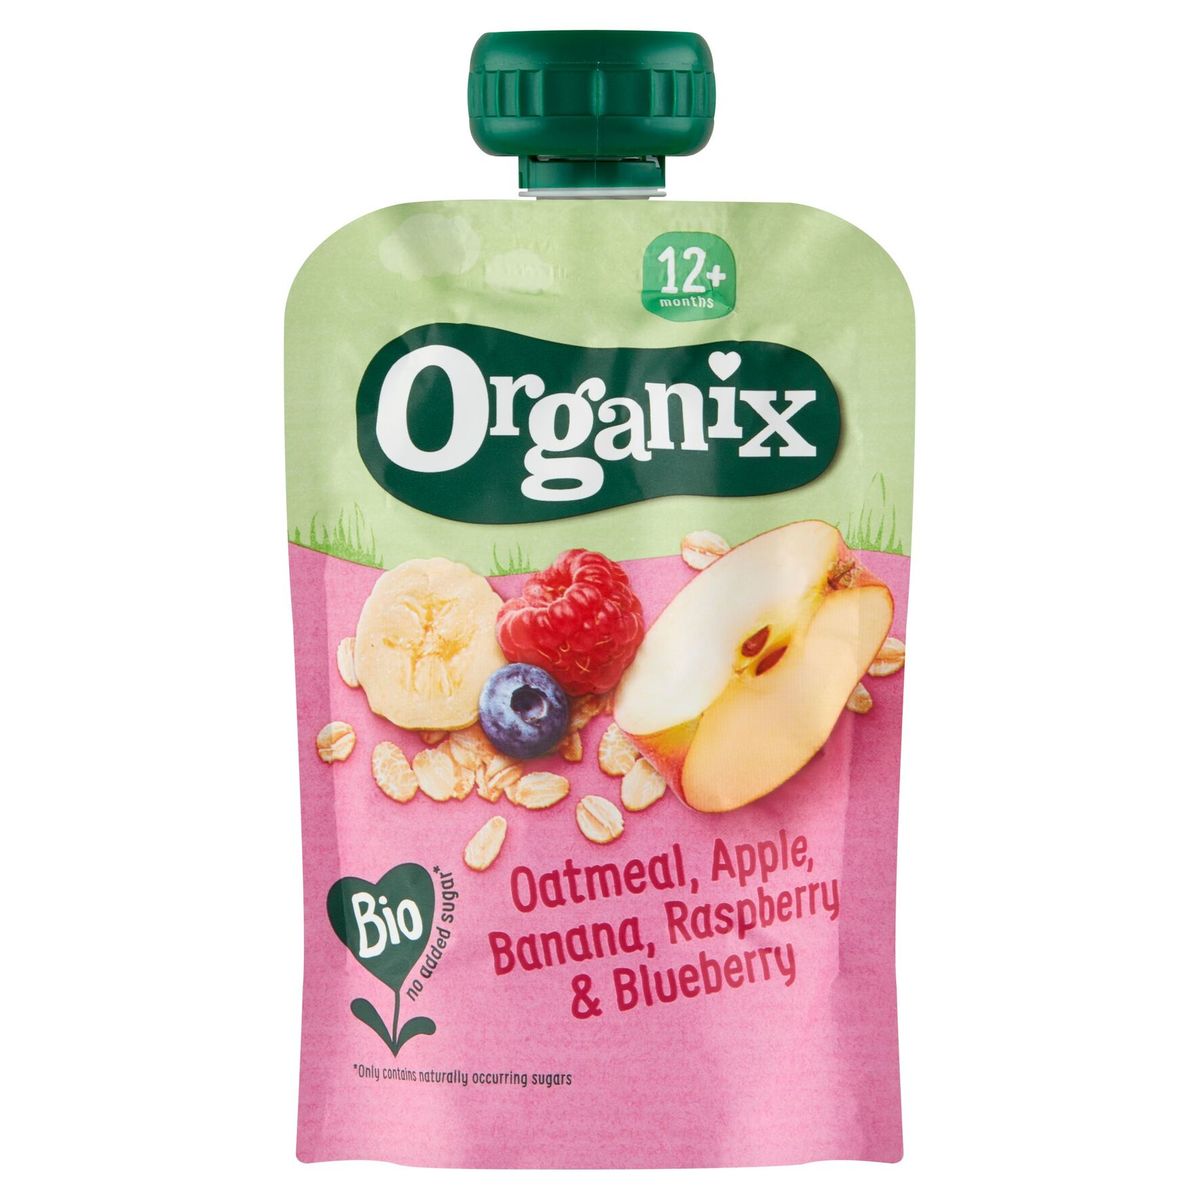 Organix Bio Oatmeal, Apple, Banana, Raspberry & Blueberry 12M+ 100 g